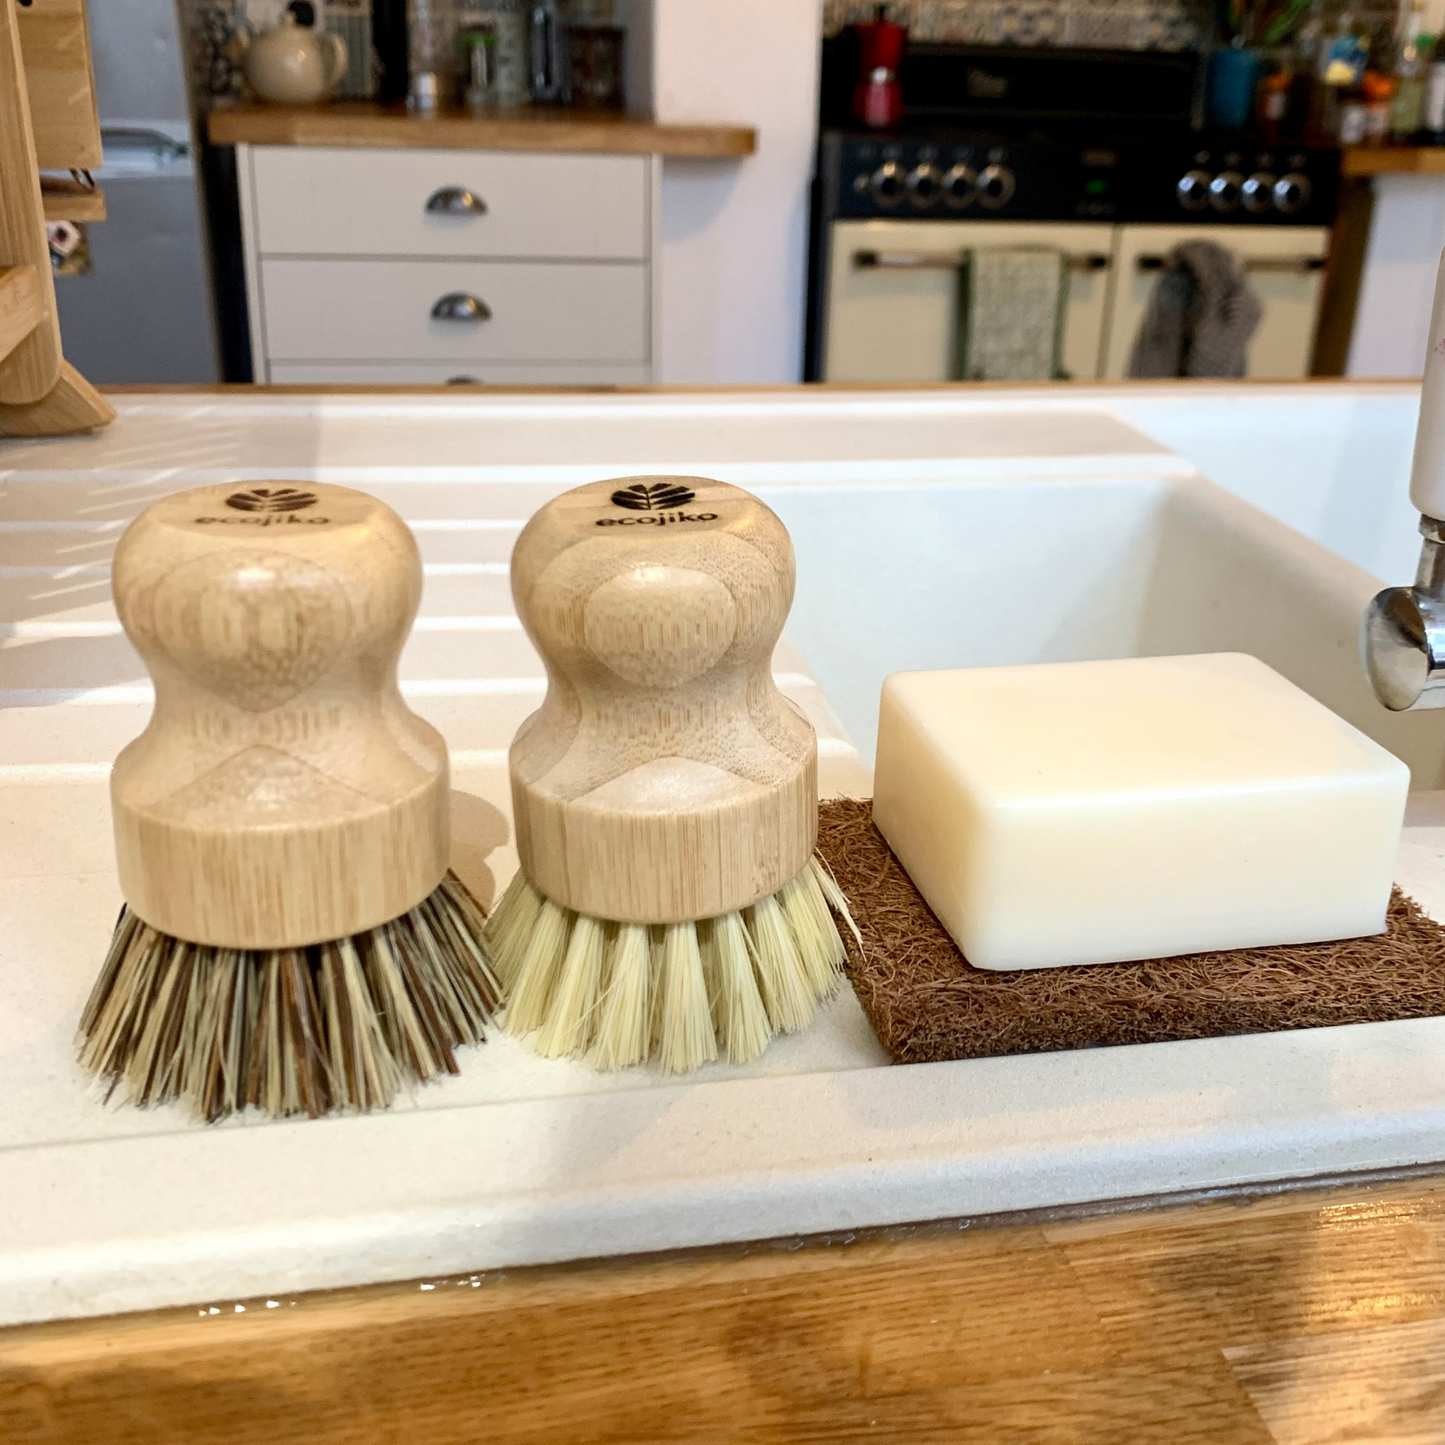 ecojiko vegan lemongrass dish soap and soap rest on kitchen sink